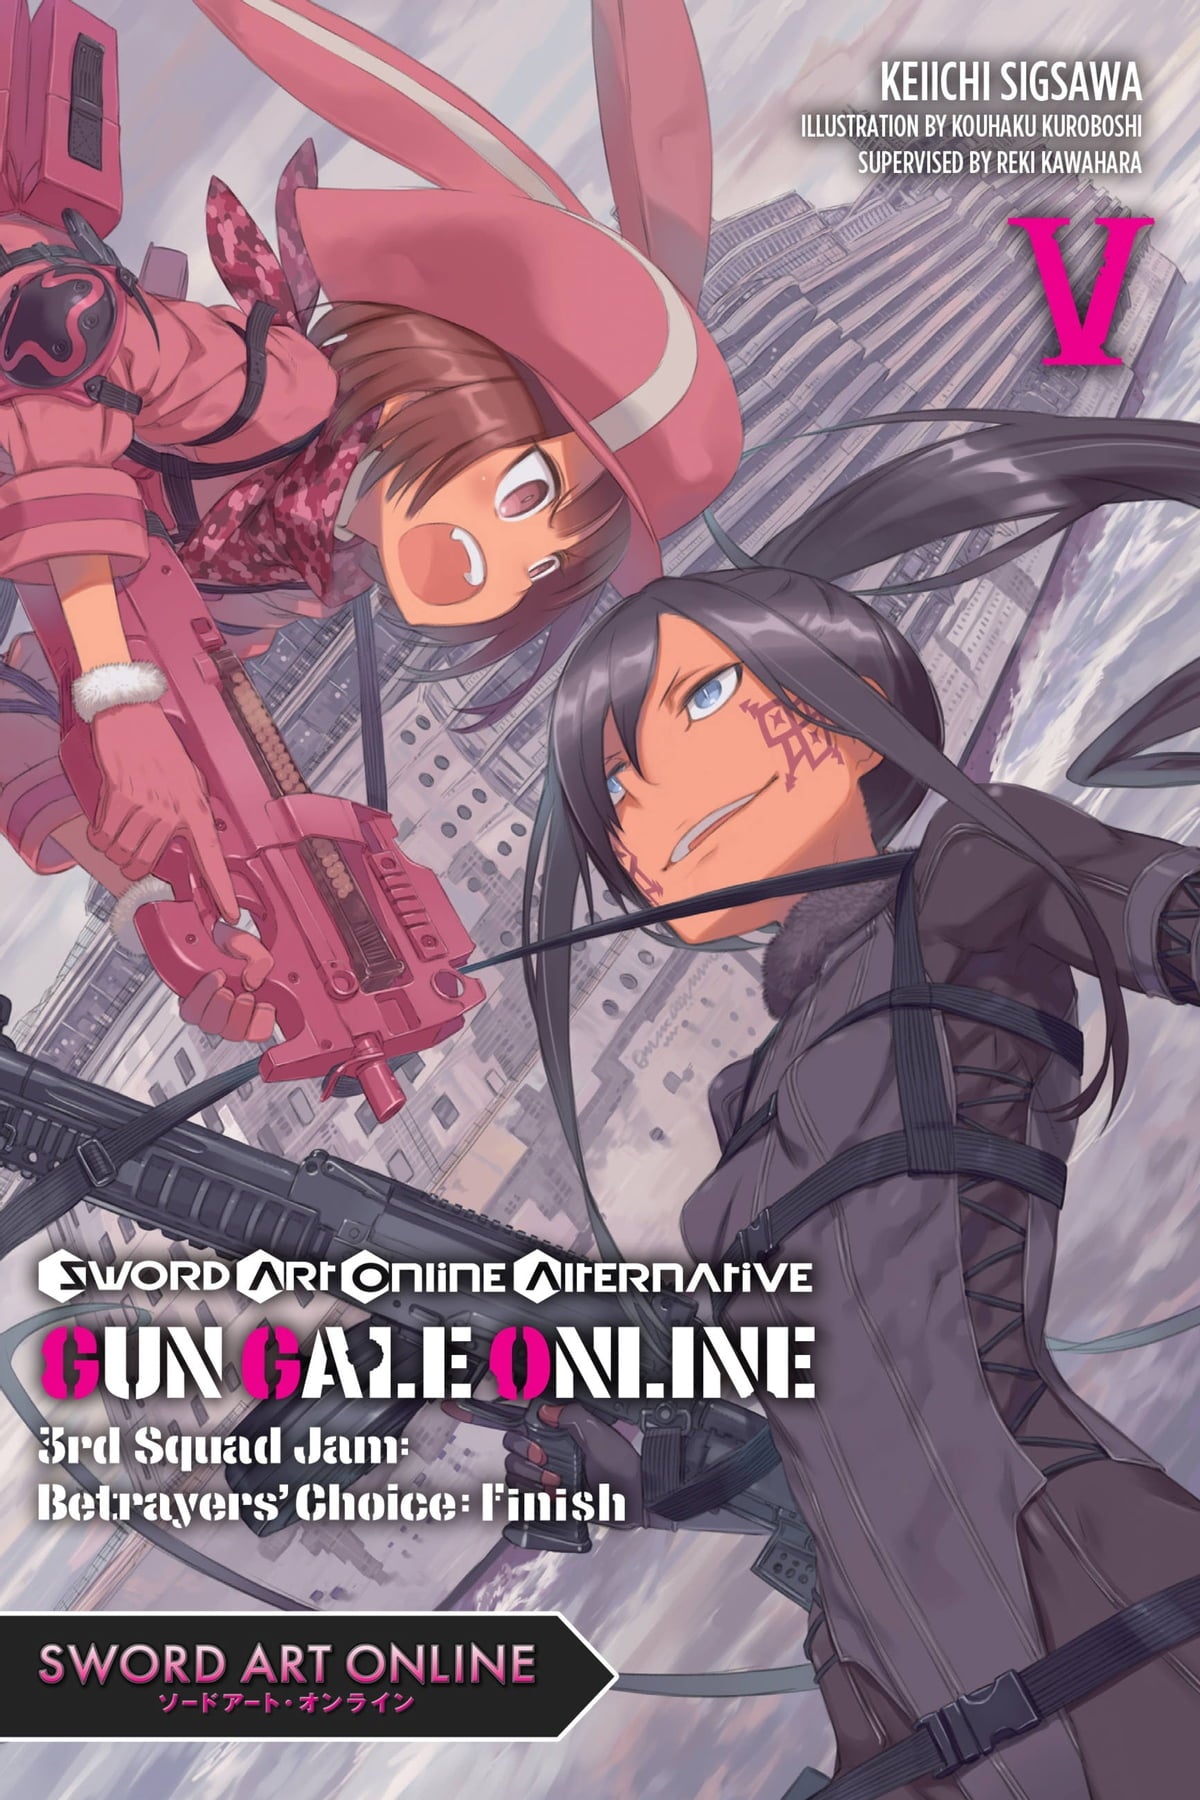 Sword Art Online Alternative Gun Gale Online Vol. 05 (Light Novel): 3rd Squad Jam: Betrayers' Choice: Finish